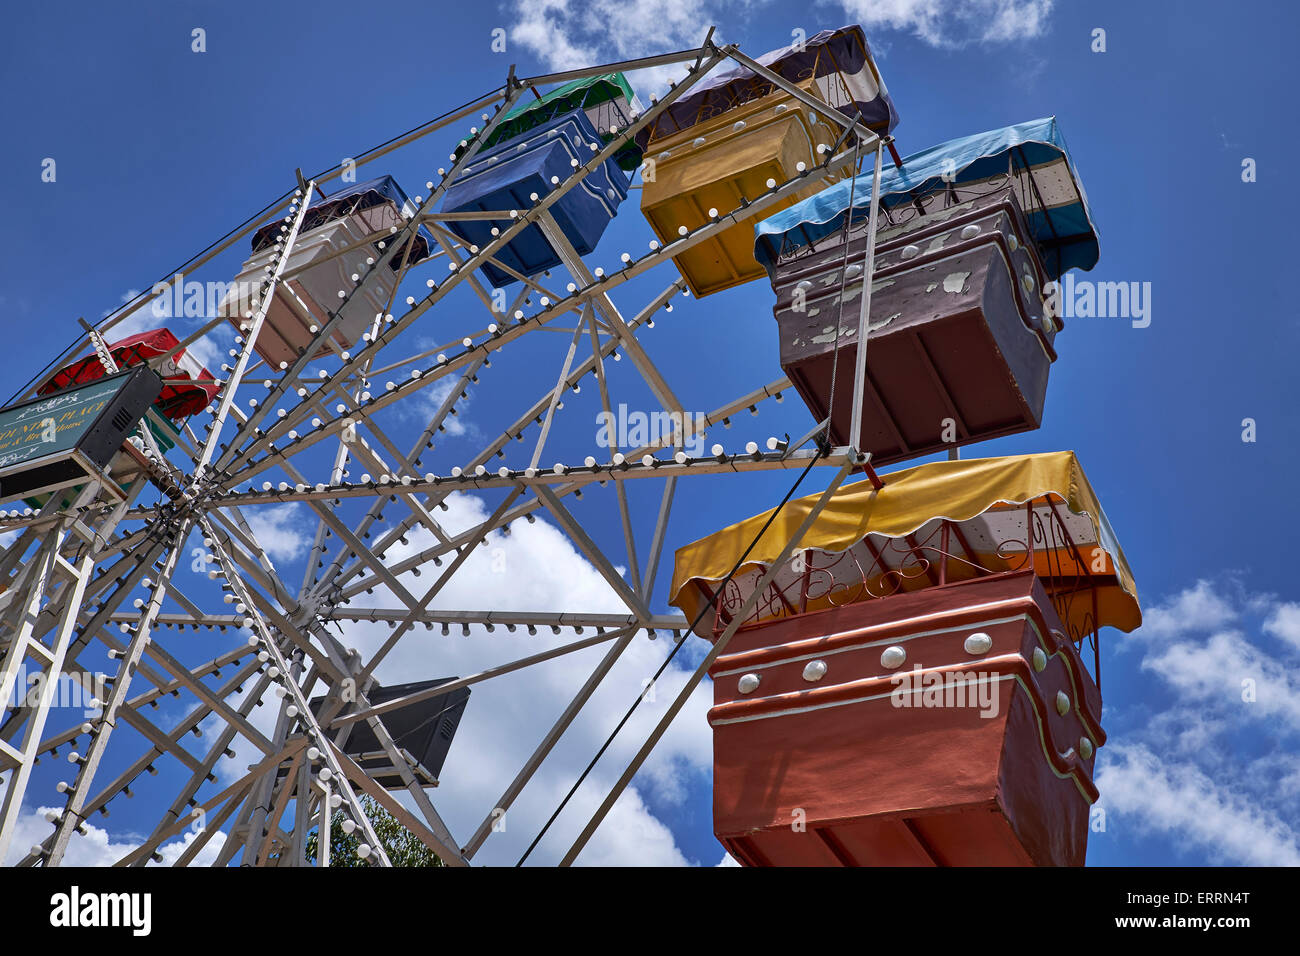 Ferris wheel. Big wheel riding carriage. Fairground ride against a blue summer sky. Stock Photo